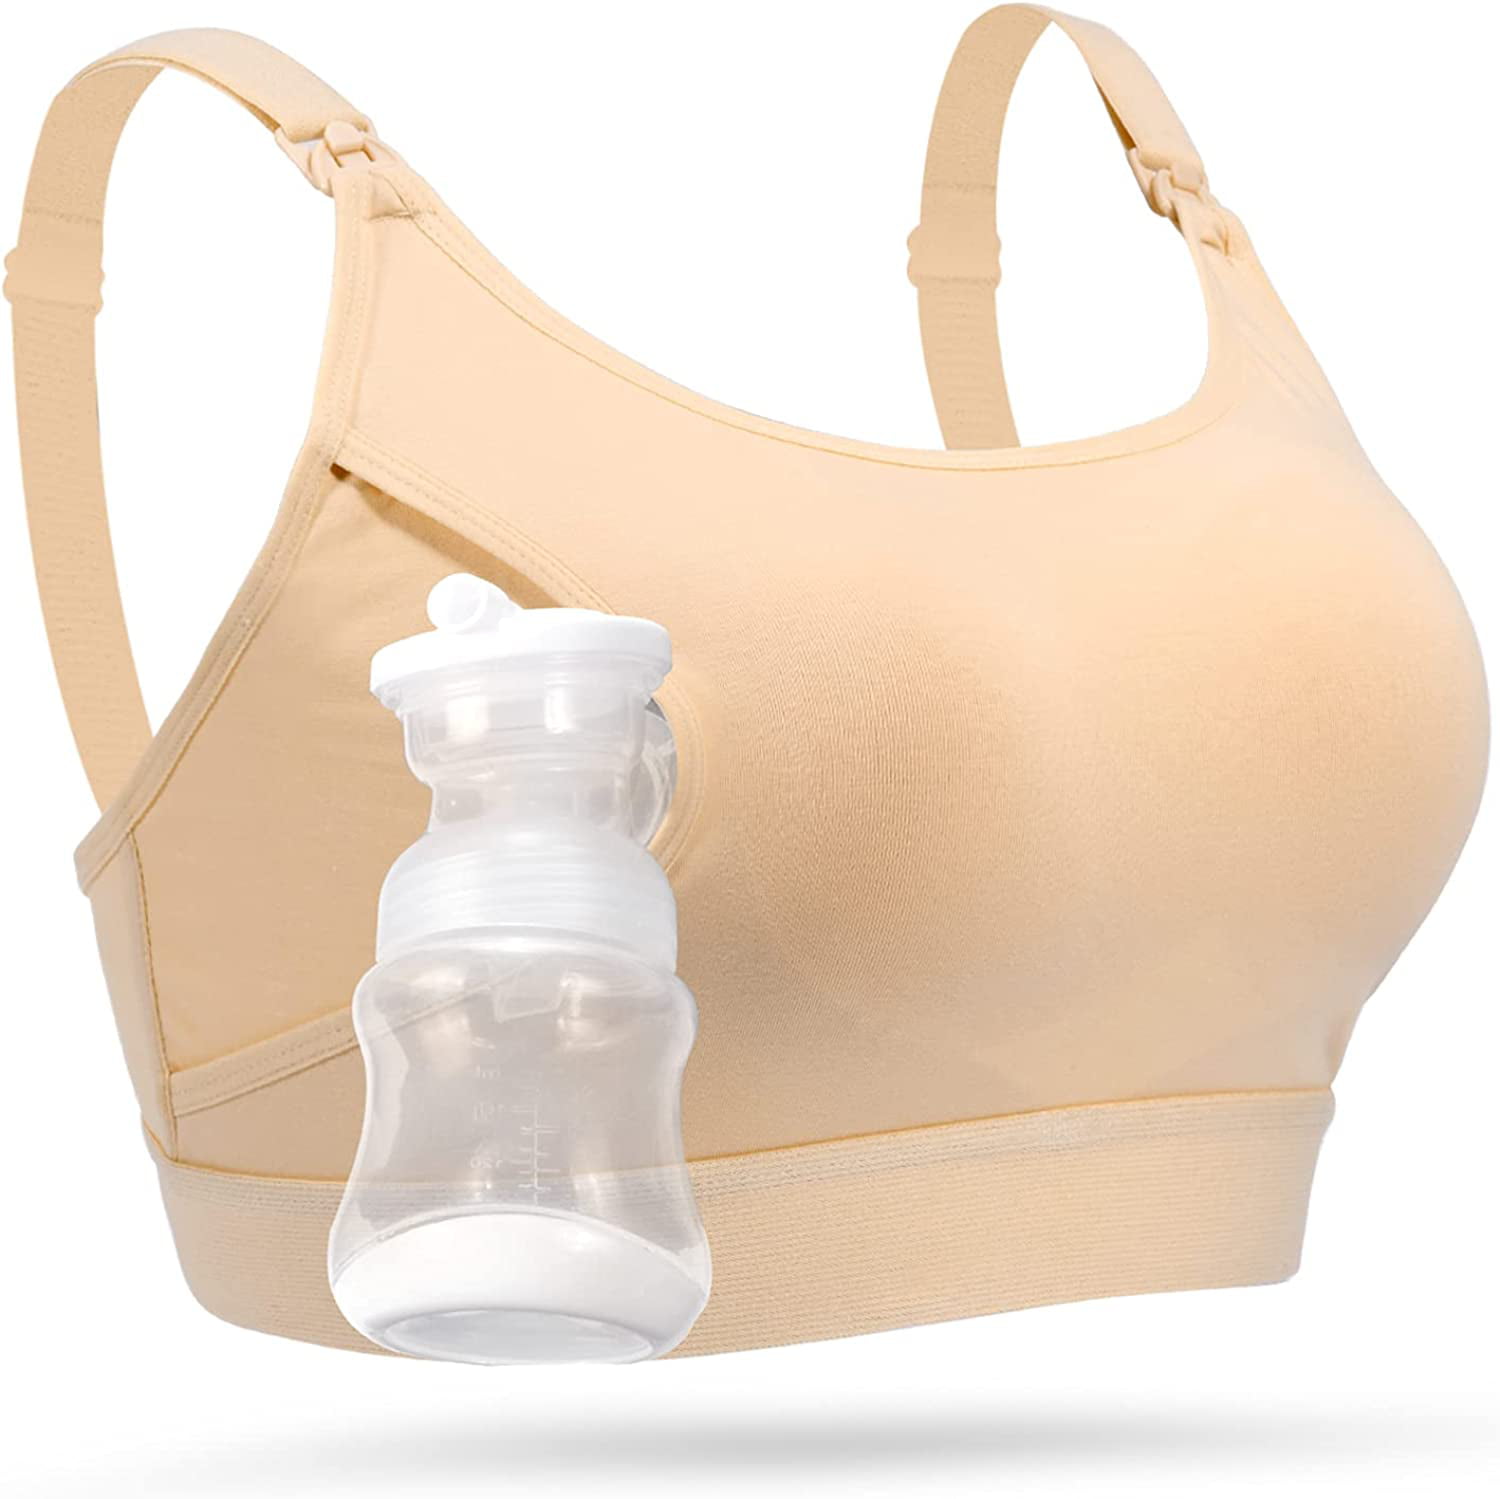 Breast Pump Bras